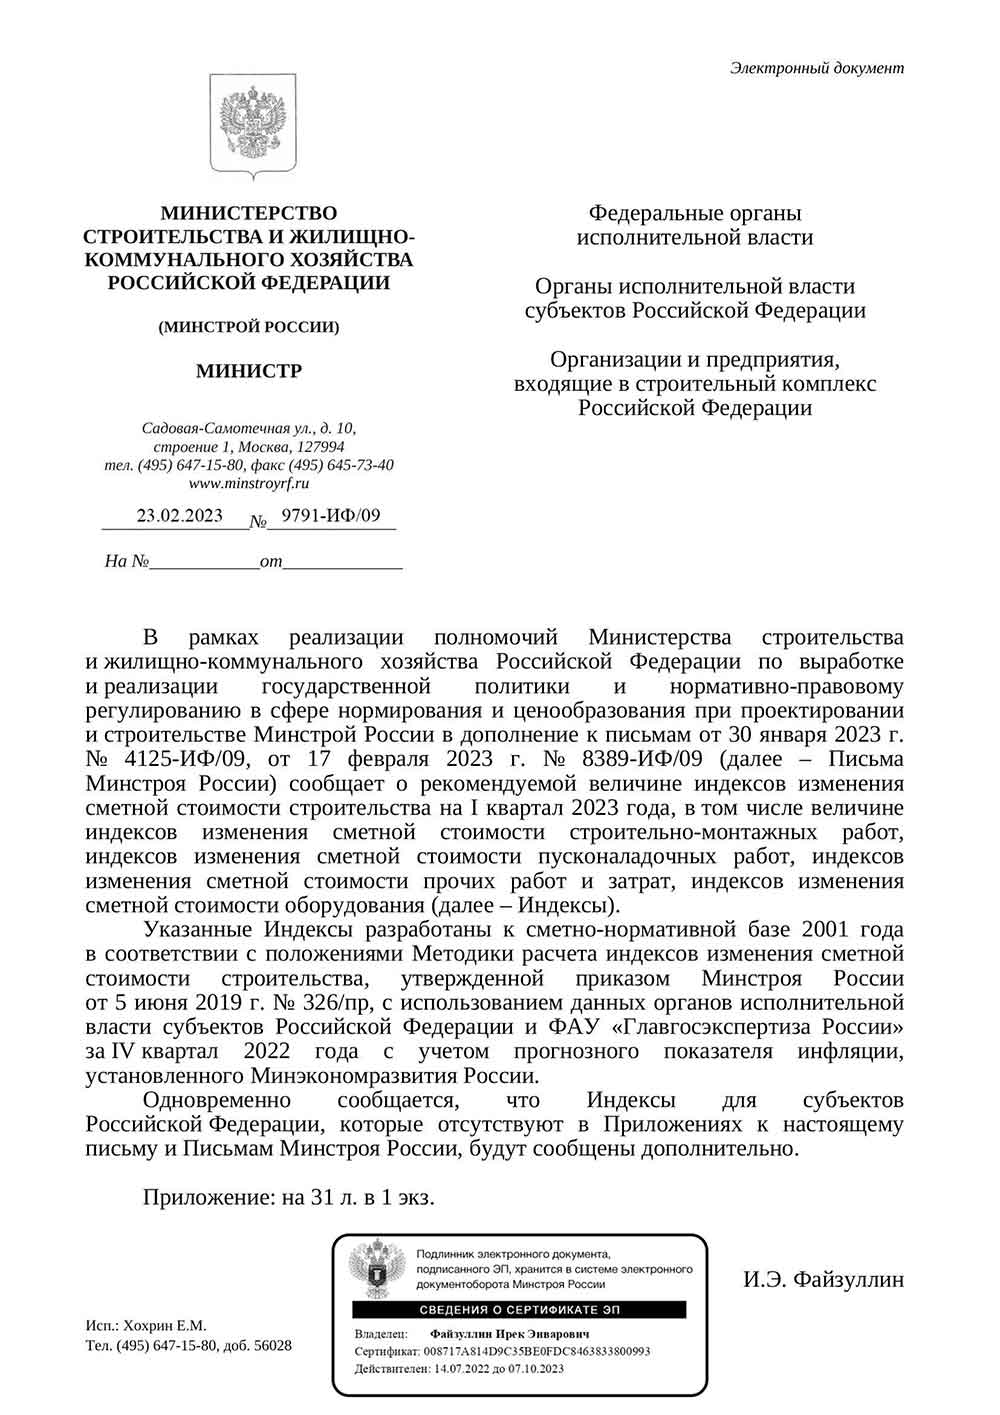 Письмо Минстроя РФ №9791-ИФ/09 от 23.02.2023 г.